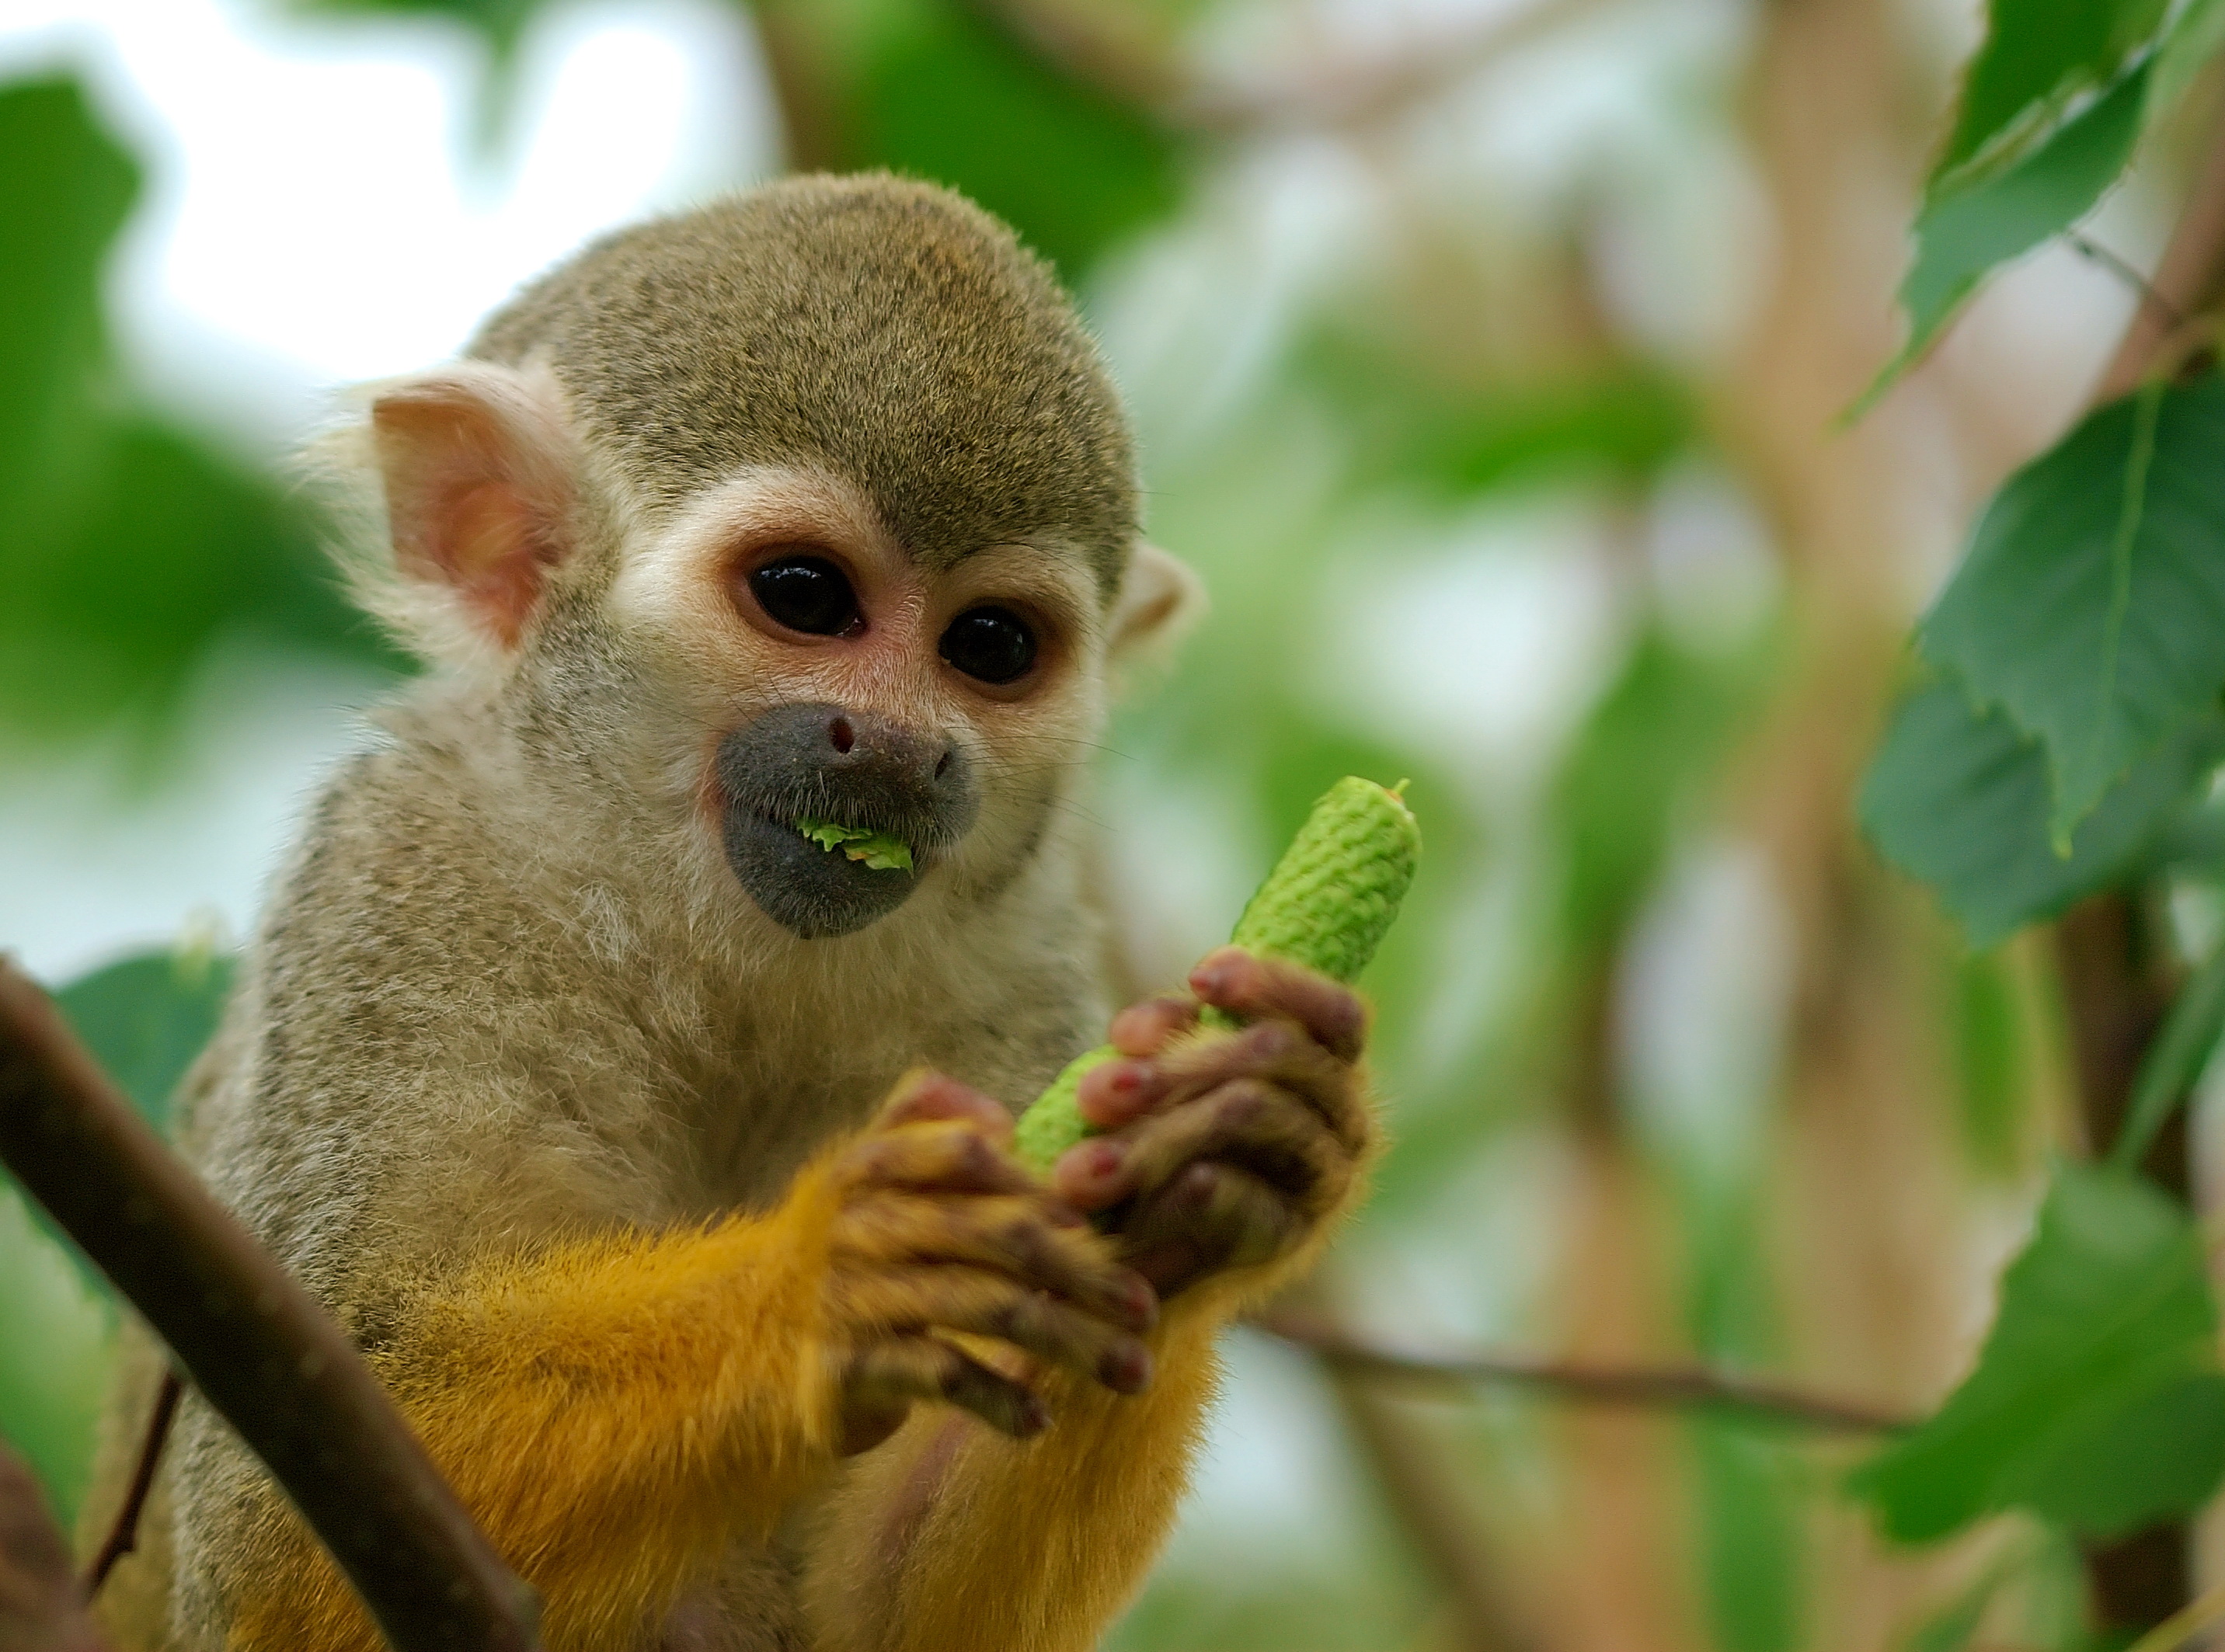 Squirrel Monkey (Family: Cebidae, Genus: Saimiri) - Wiki; Image ONLY